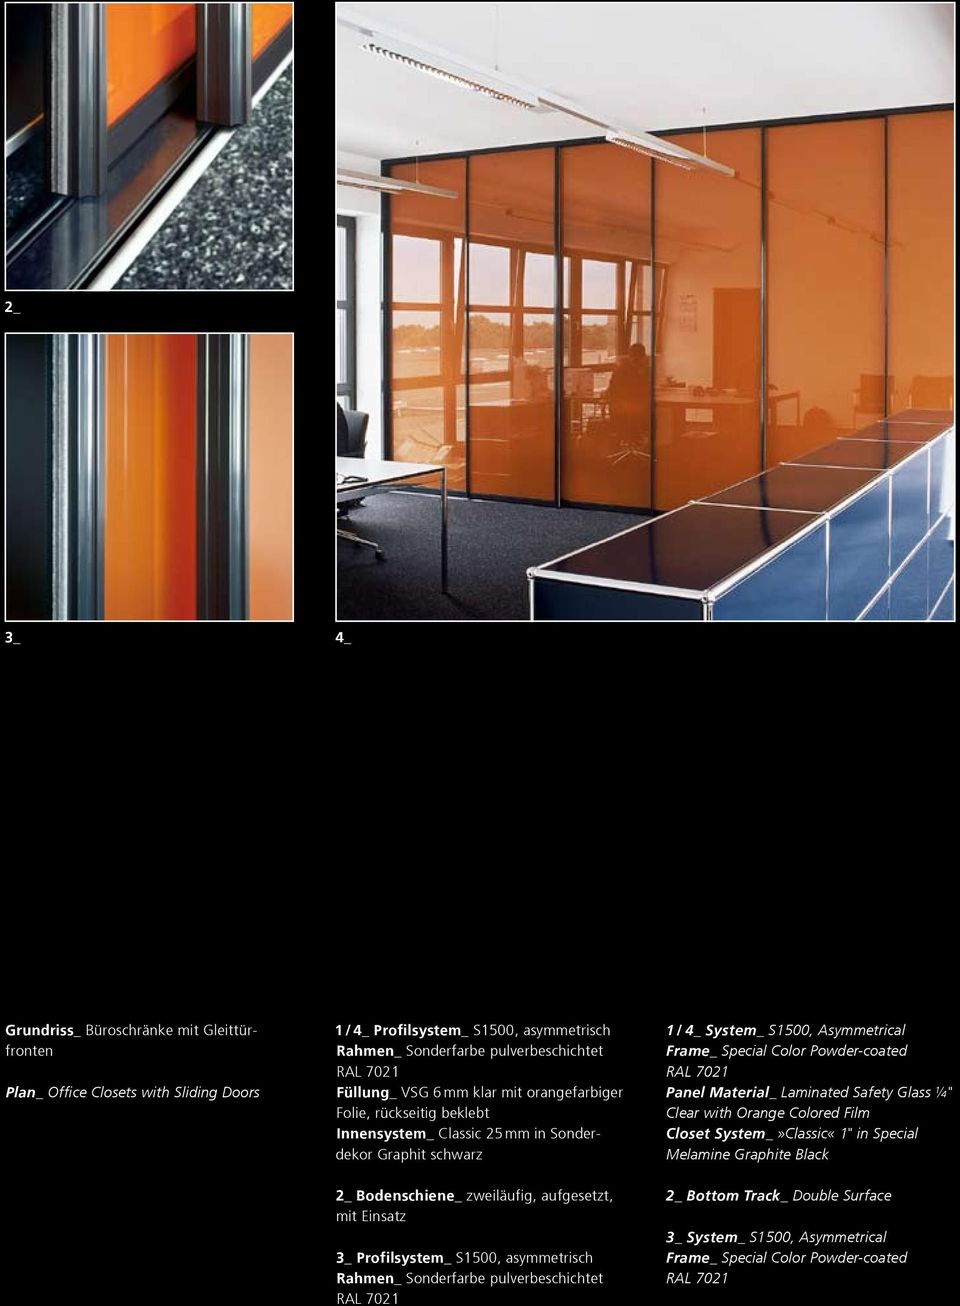 RAL 7021 Panel Material_ Laminated Safety Glass ¼" Clear with Orange Colored Film Closet System_»Classic«1" in Special Melamine Graphite Black 2_ Bodenschiene_ zweiläufig, aufgesetzt, mit